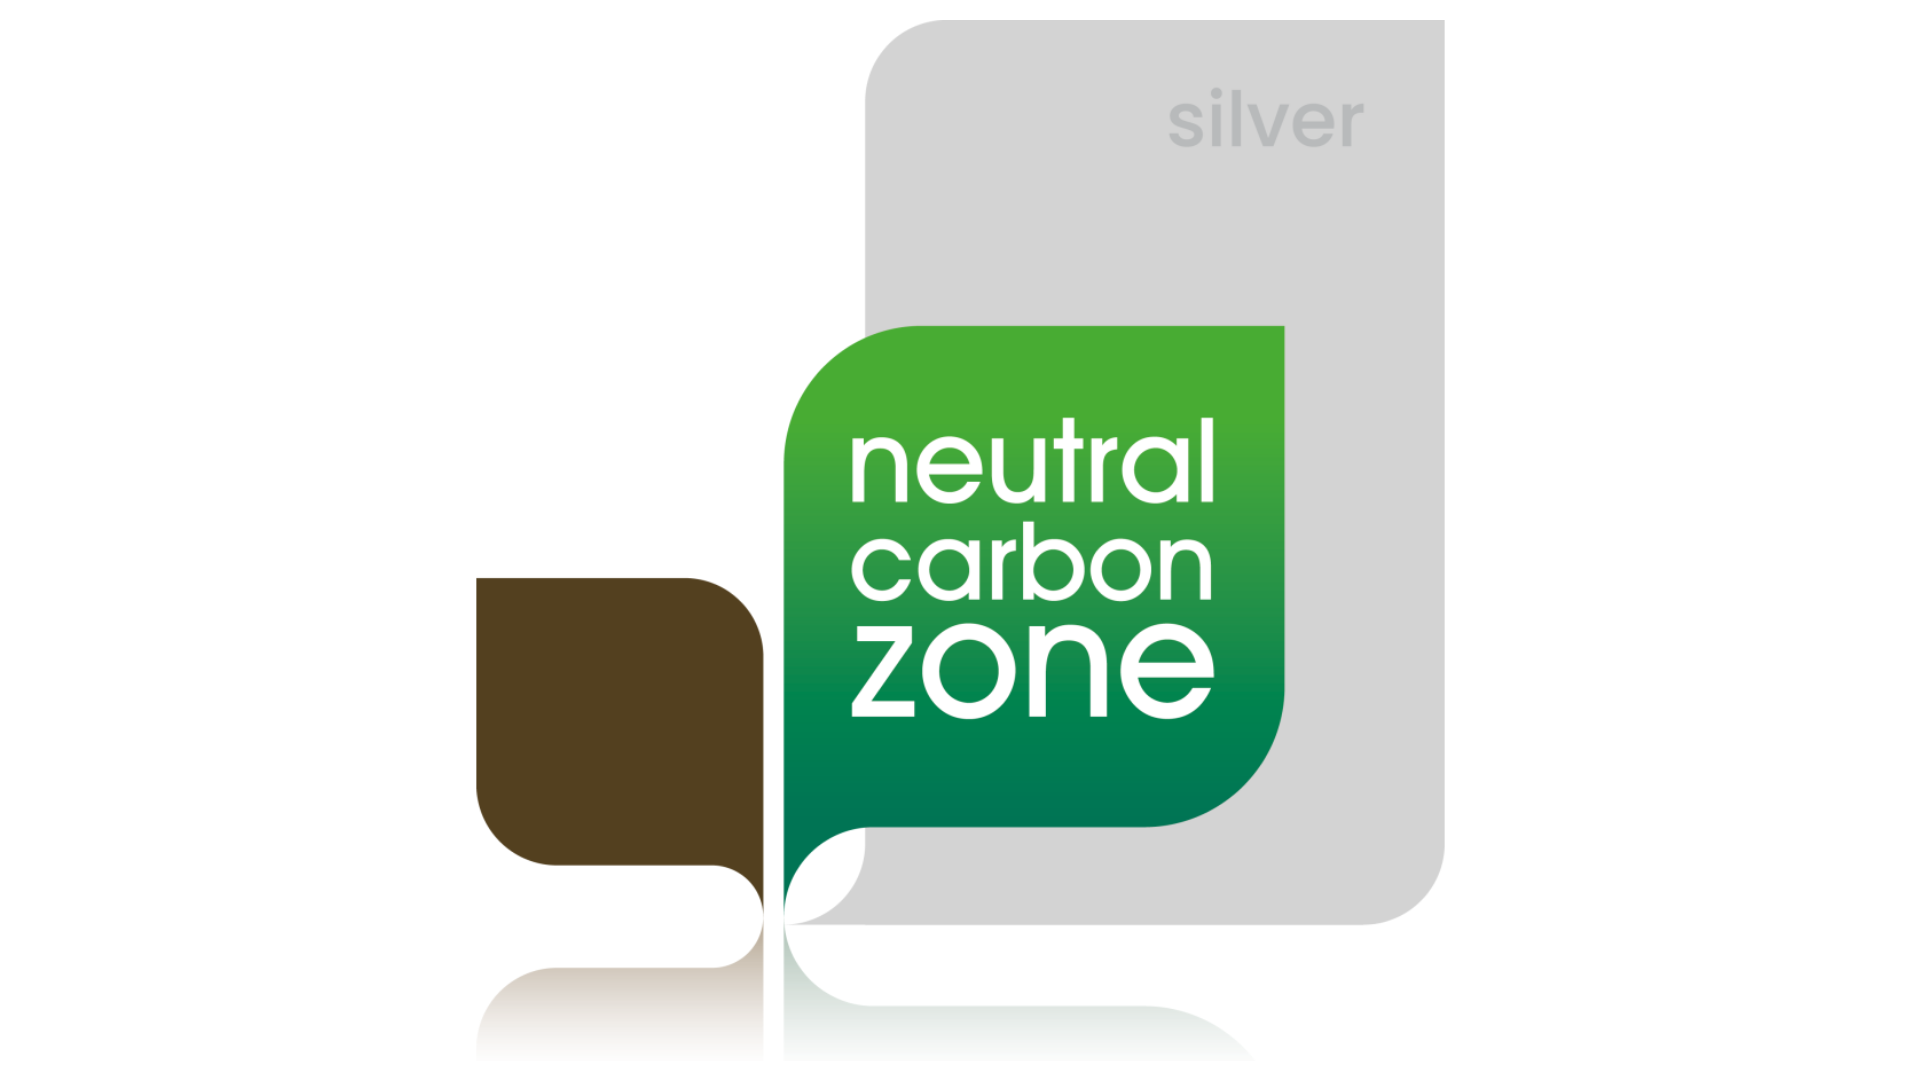 Carbon neutral silver